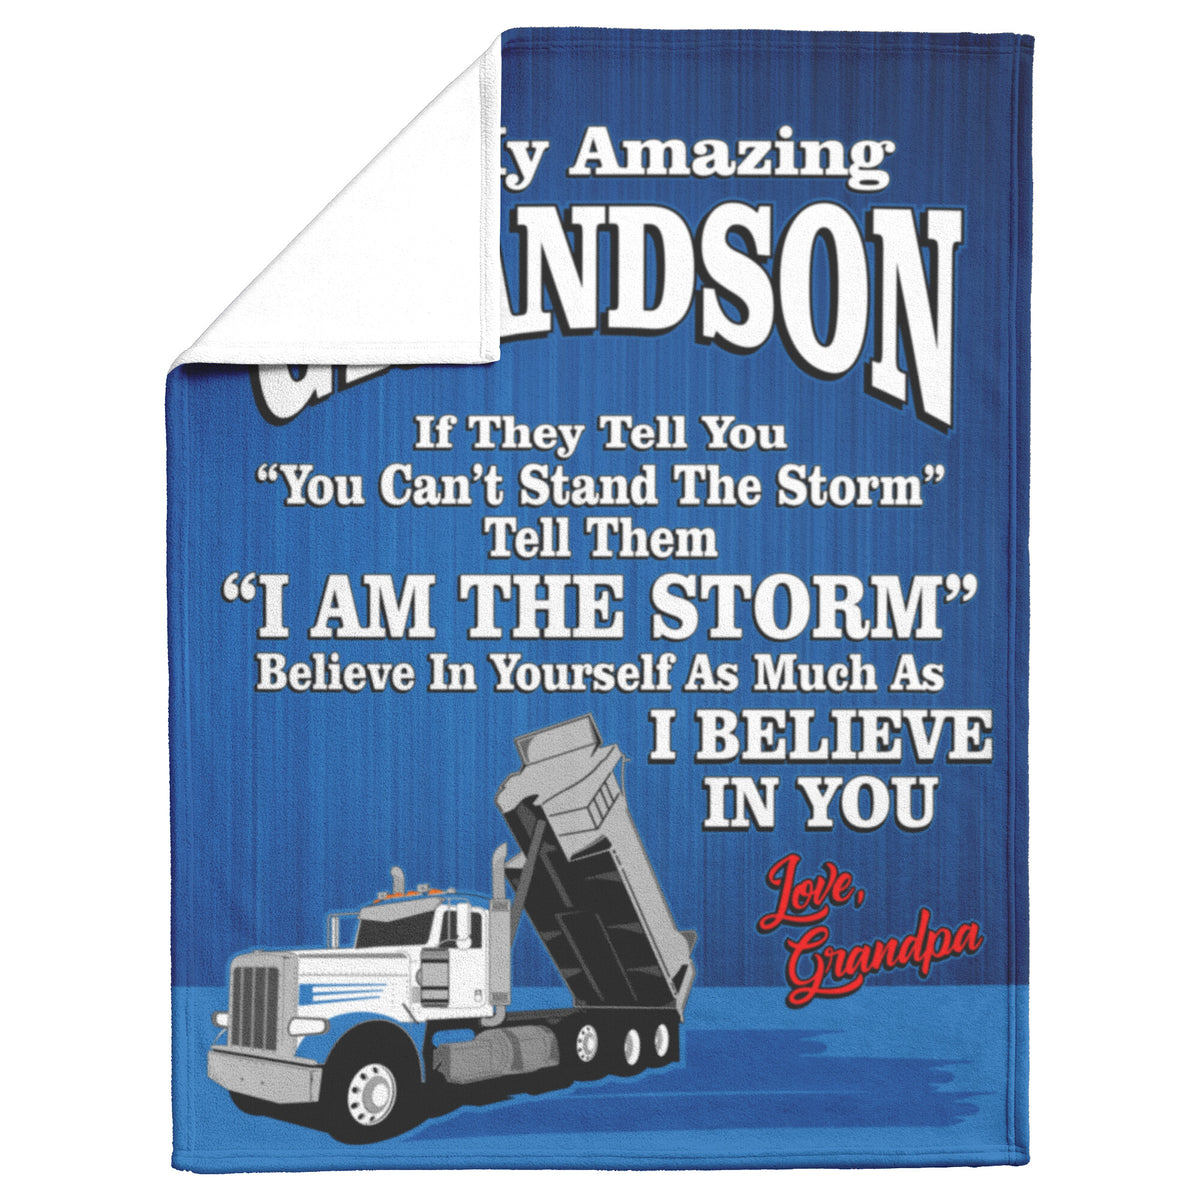 To My Amazing Grandson - Love Grandpa - Dump Truck - Free Shipping